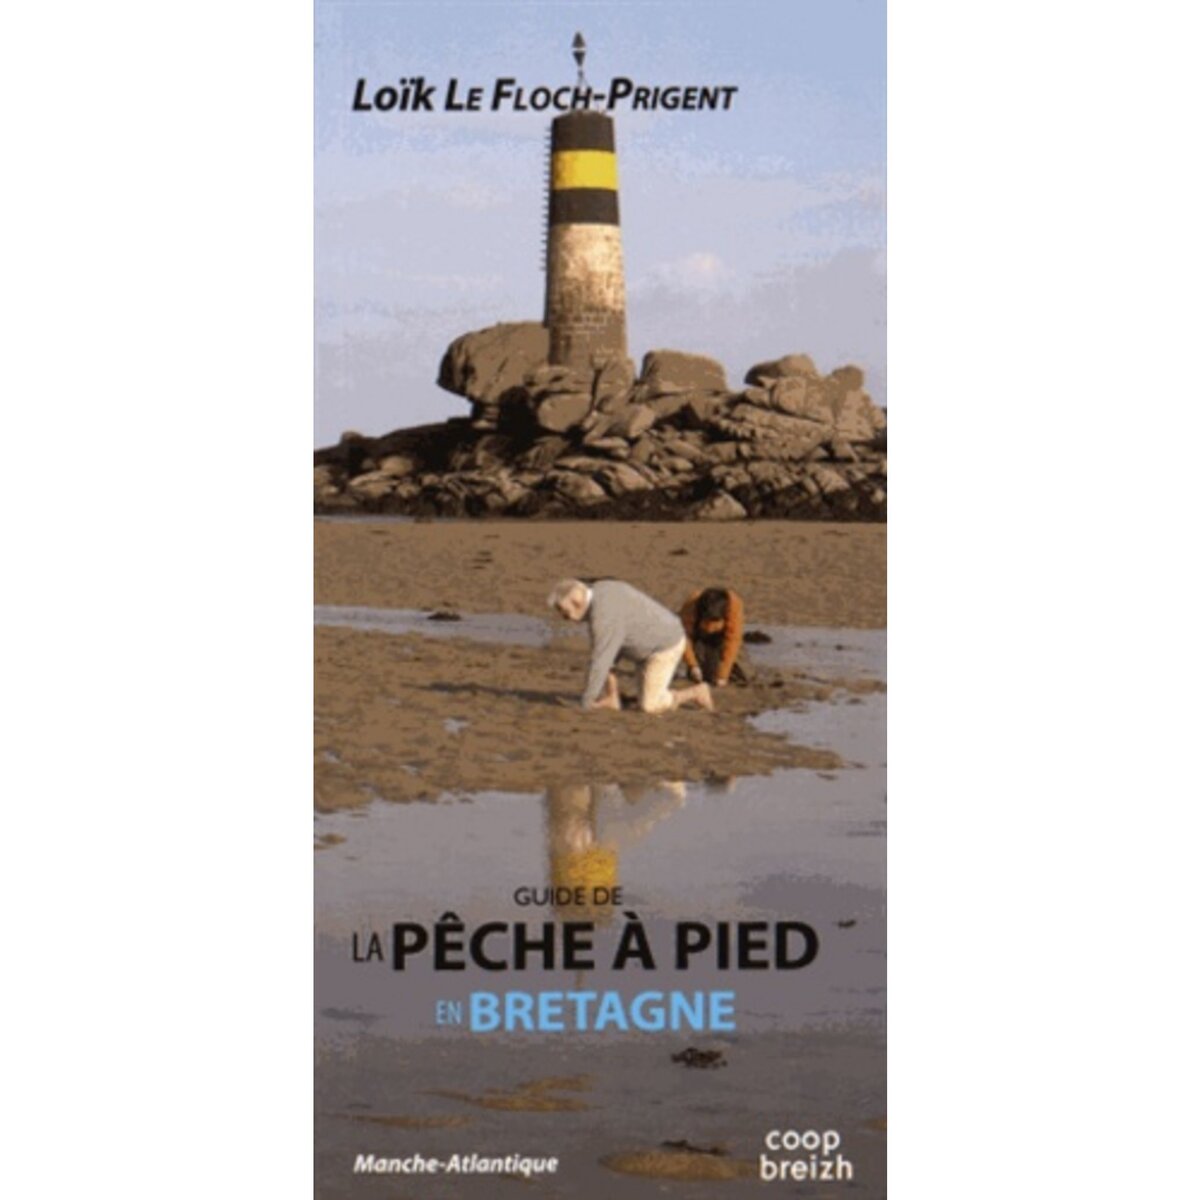  LA PECHE A PIED EN BRETAGNE, Le Floch-Prigent Loïk